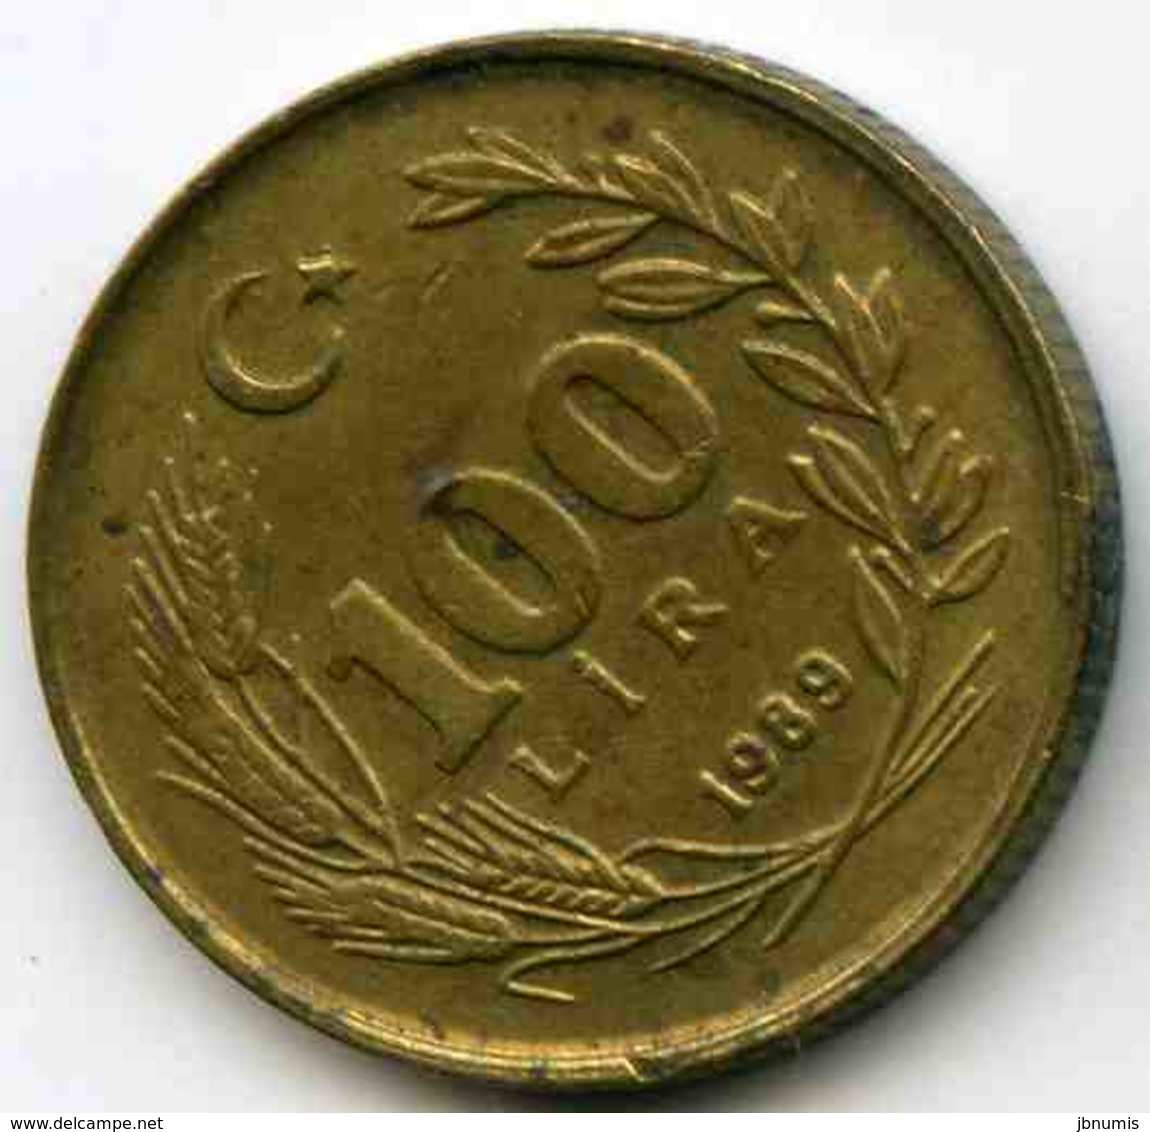 Turquie Turkey 100 Lira 1989 KM 988 - Turkey